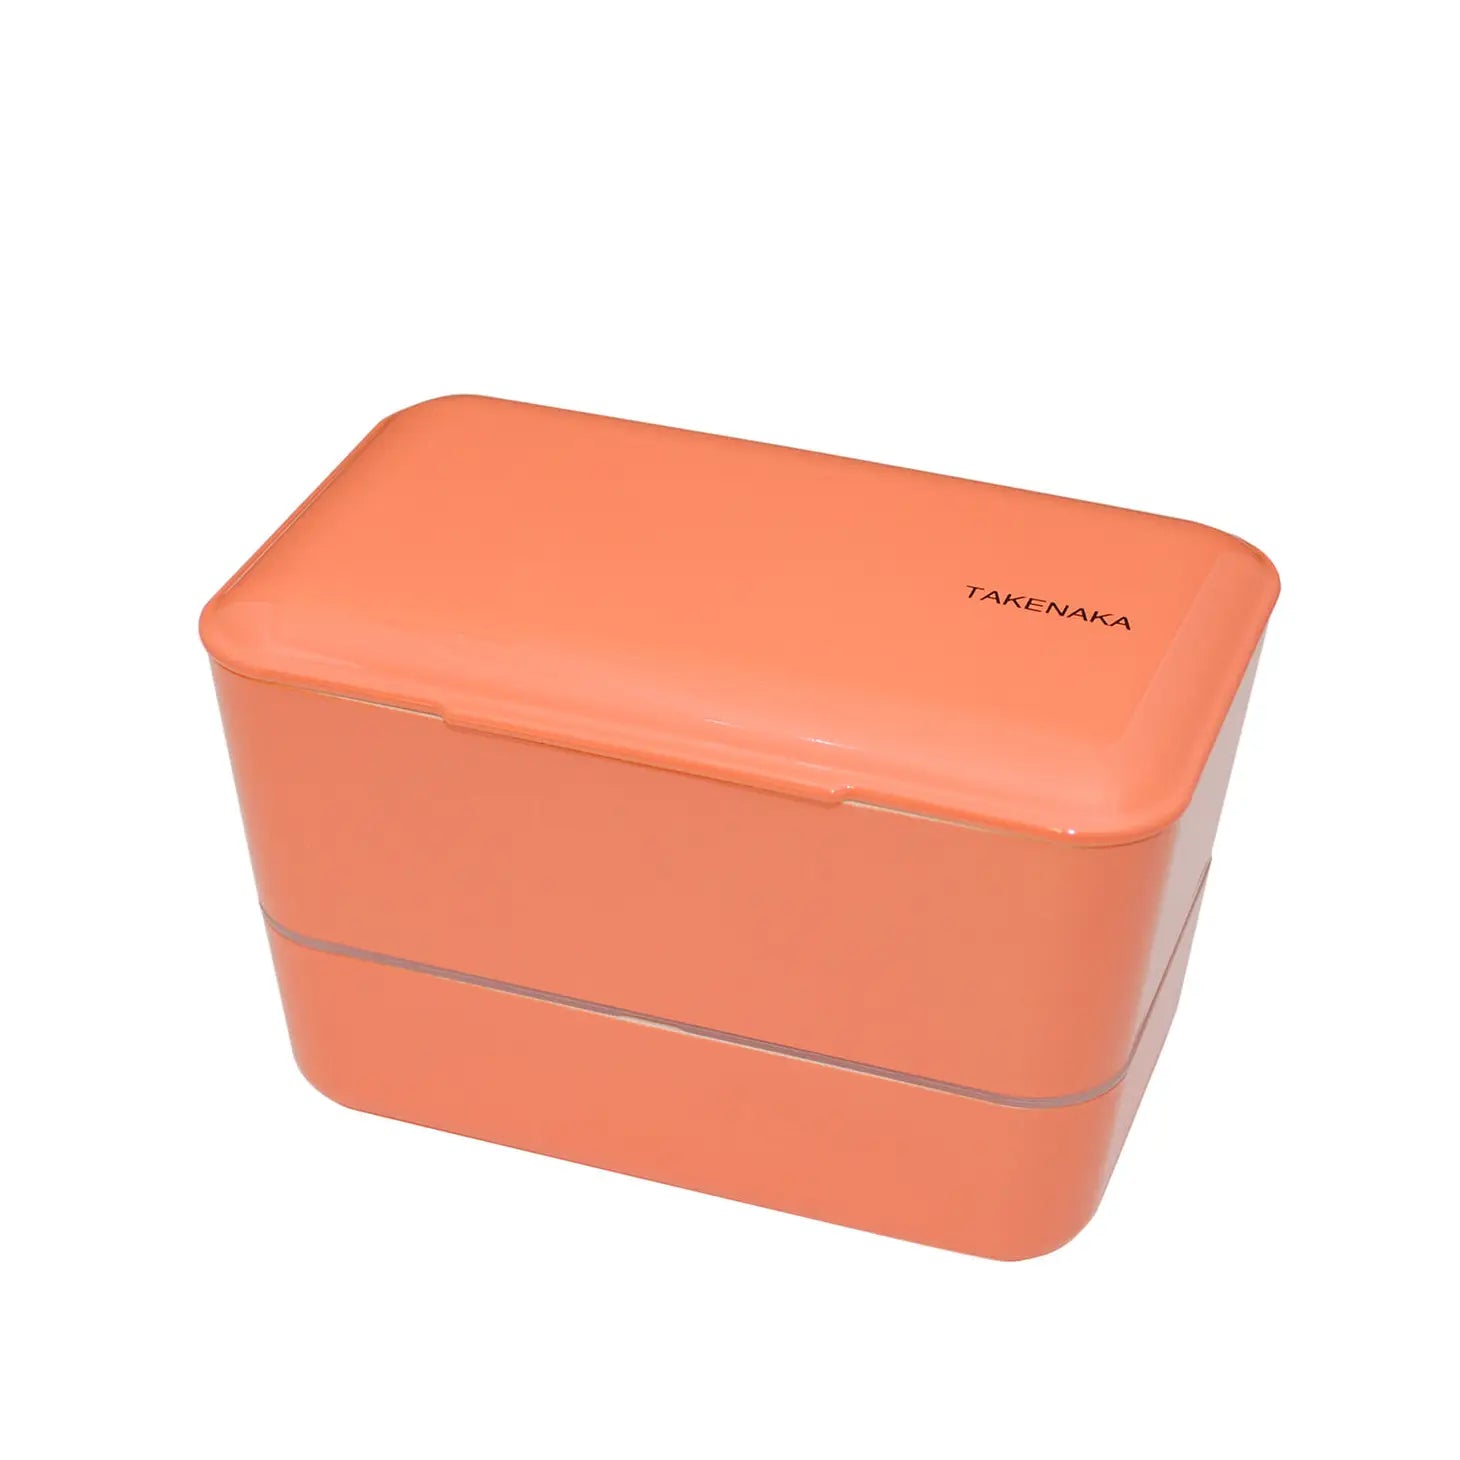 Dual bento box in tangerine orange 